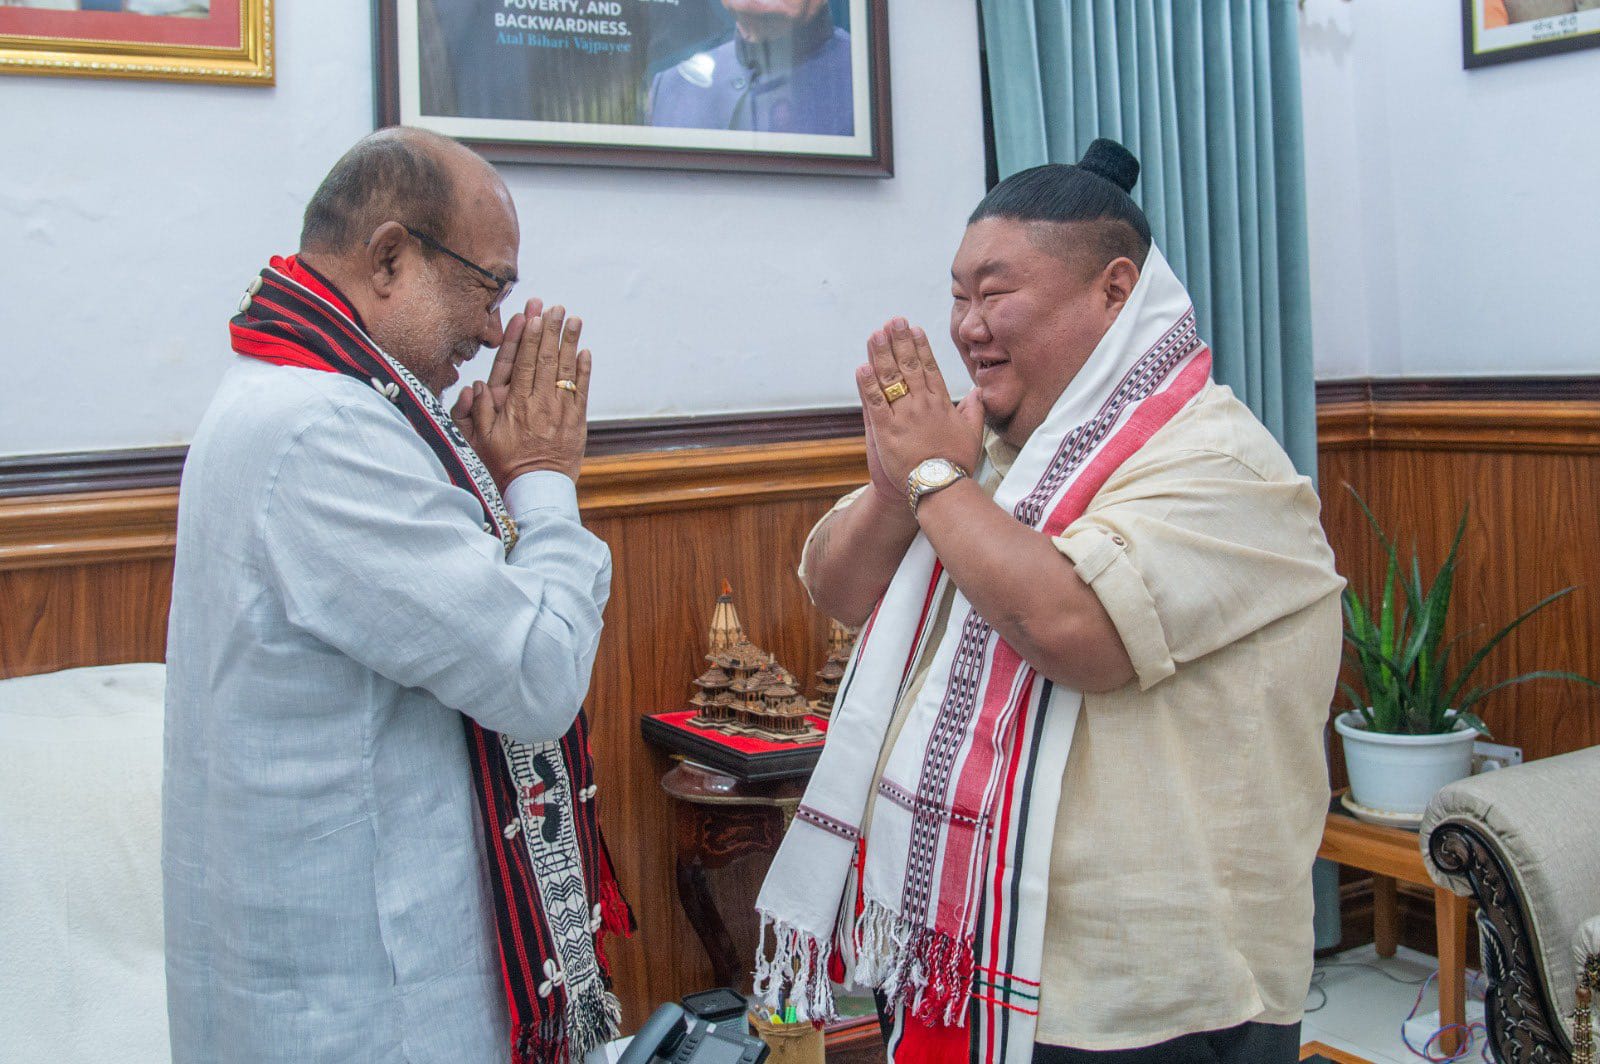 manipur-chief-minister-nagaland-tourism-minister-discuss-regional-development 